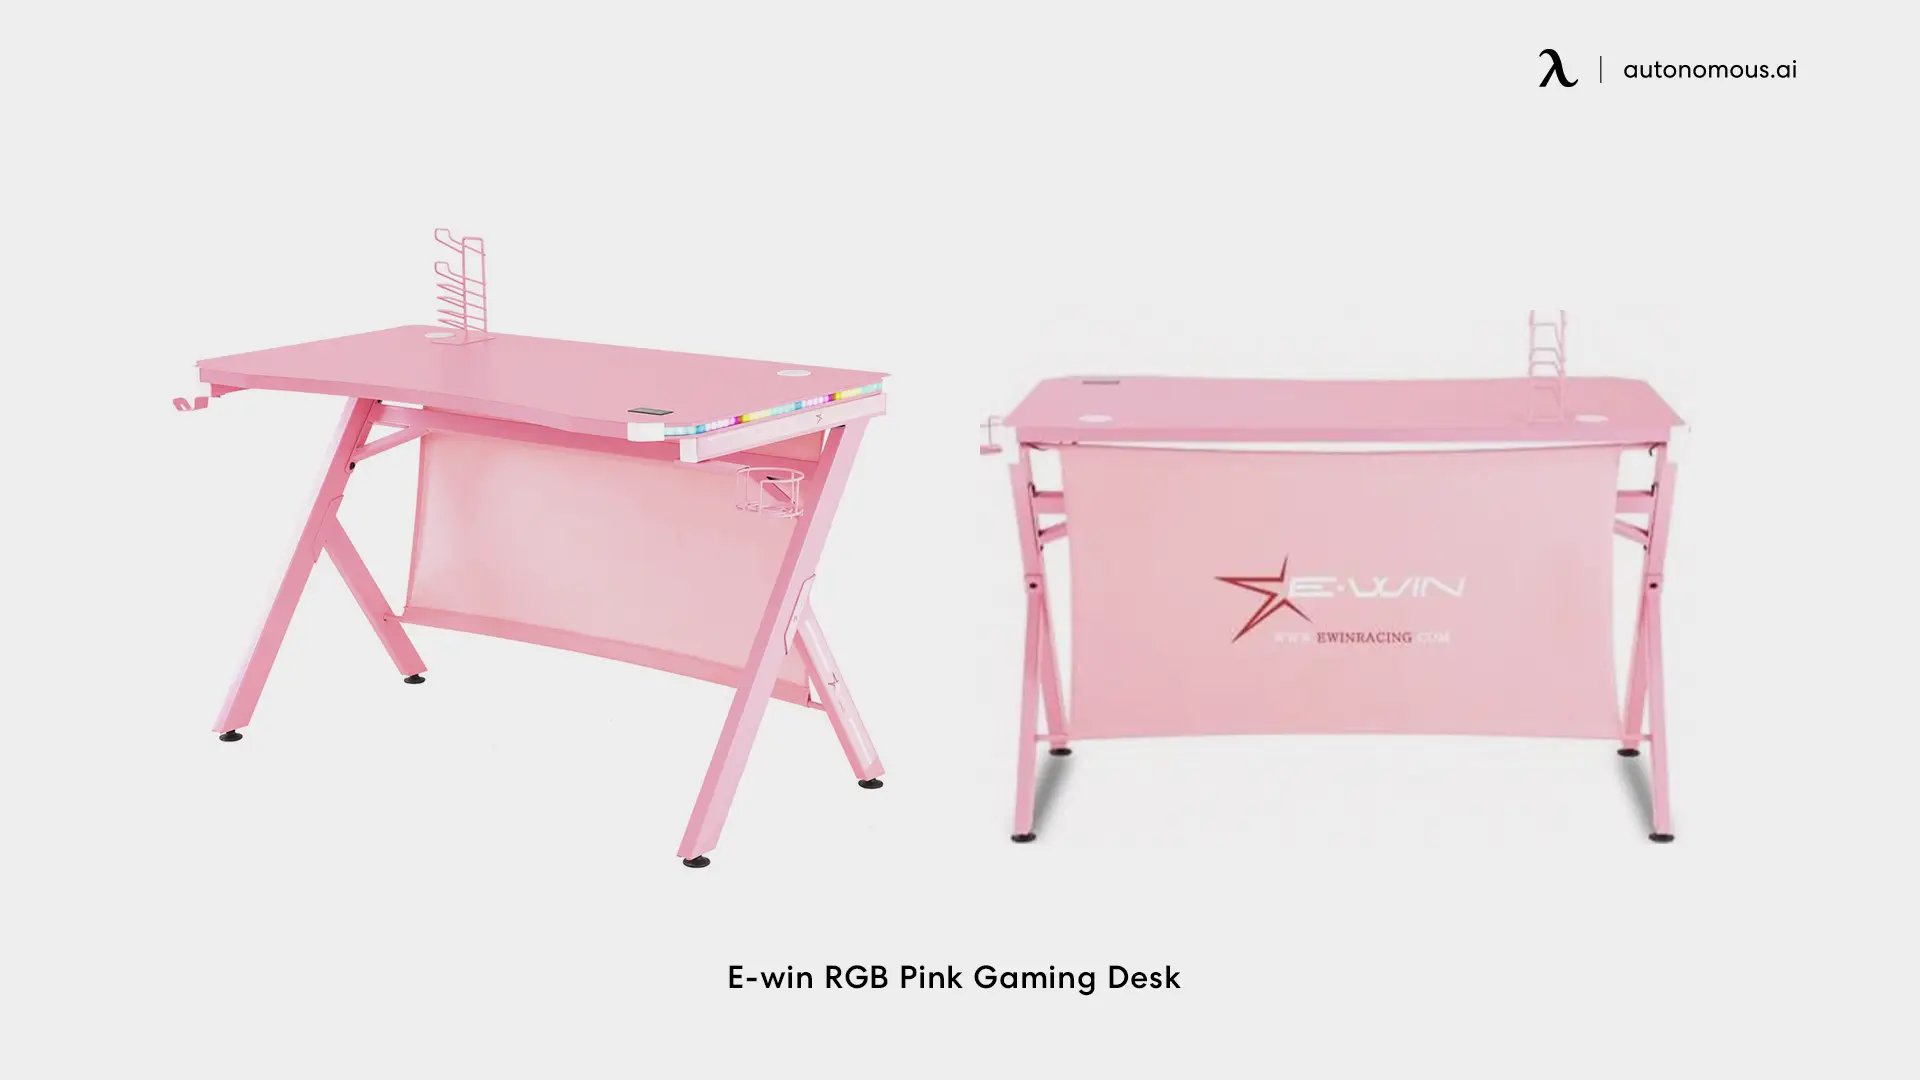 E-win RGB Pink Gaming Desk - Black Friday computer desk